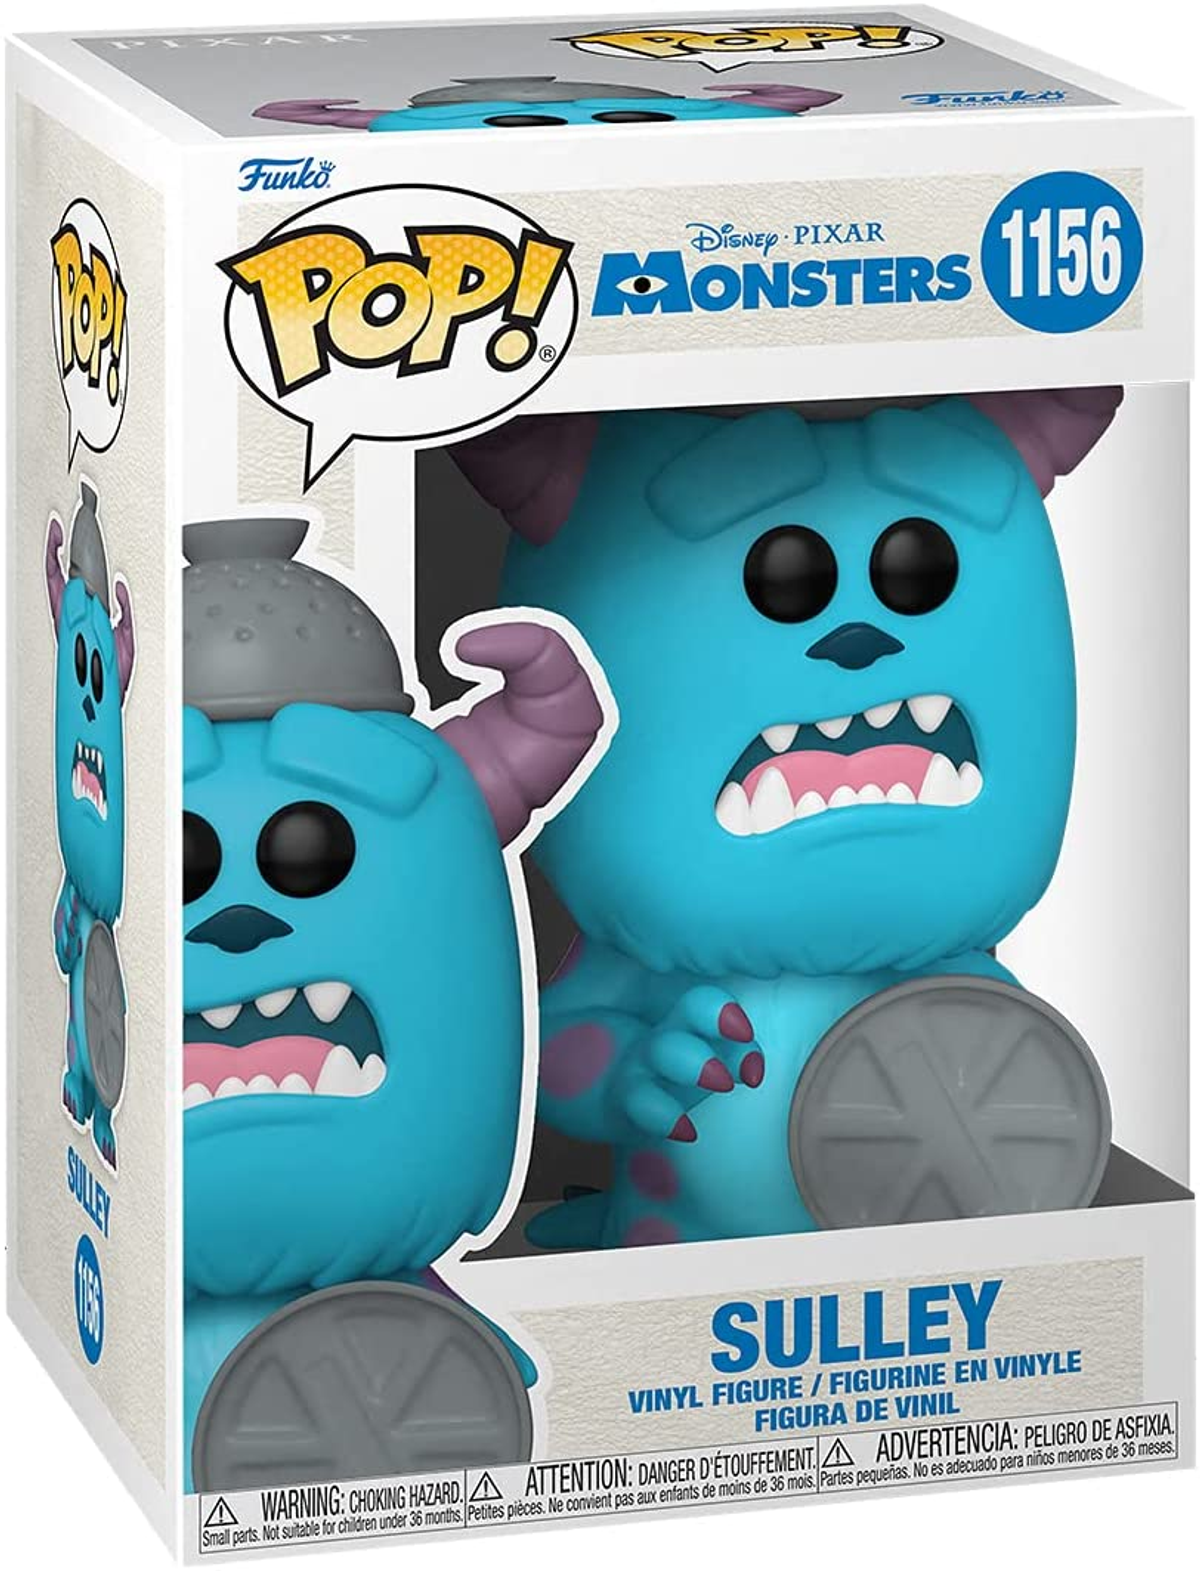 Lid with POP Sulley Disney - - Pixar - Monsters